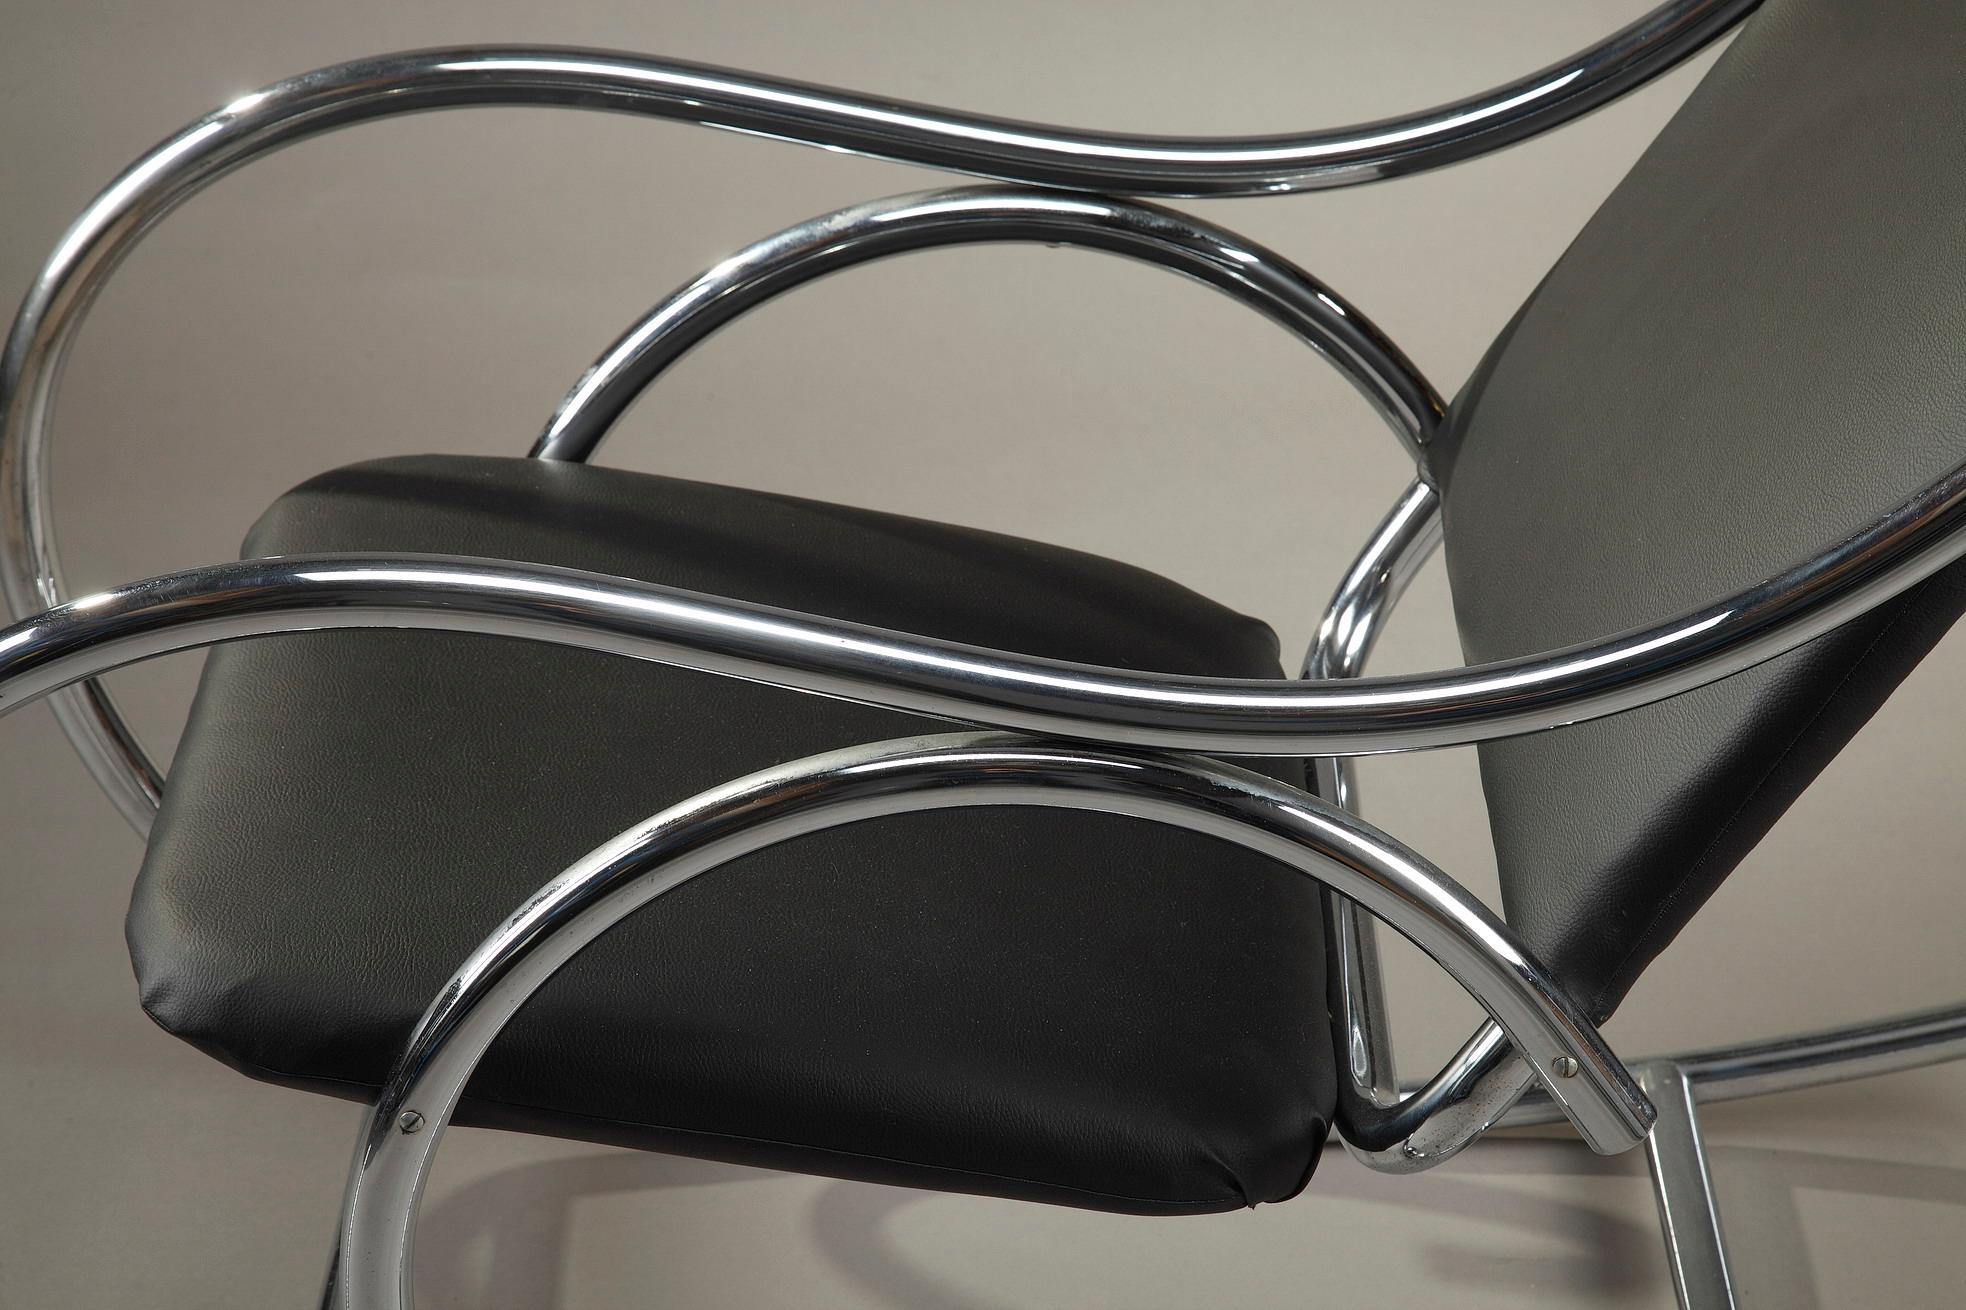 Rocking chair tubular metal Thonet style imitation leather Measures: Top.100cm, depth 110cm, width 57cm, circa 1950.